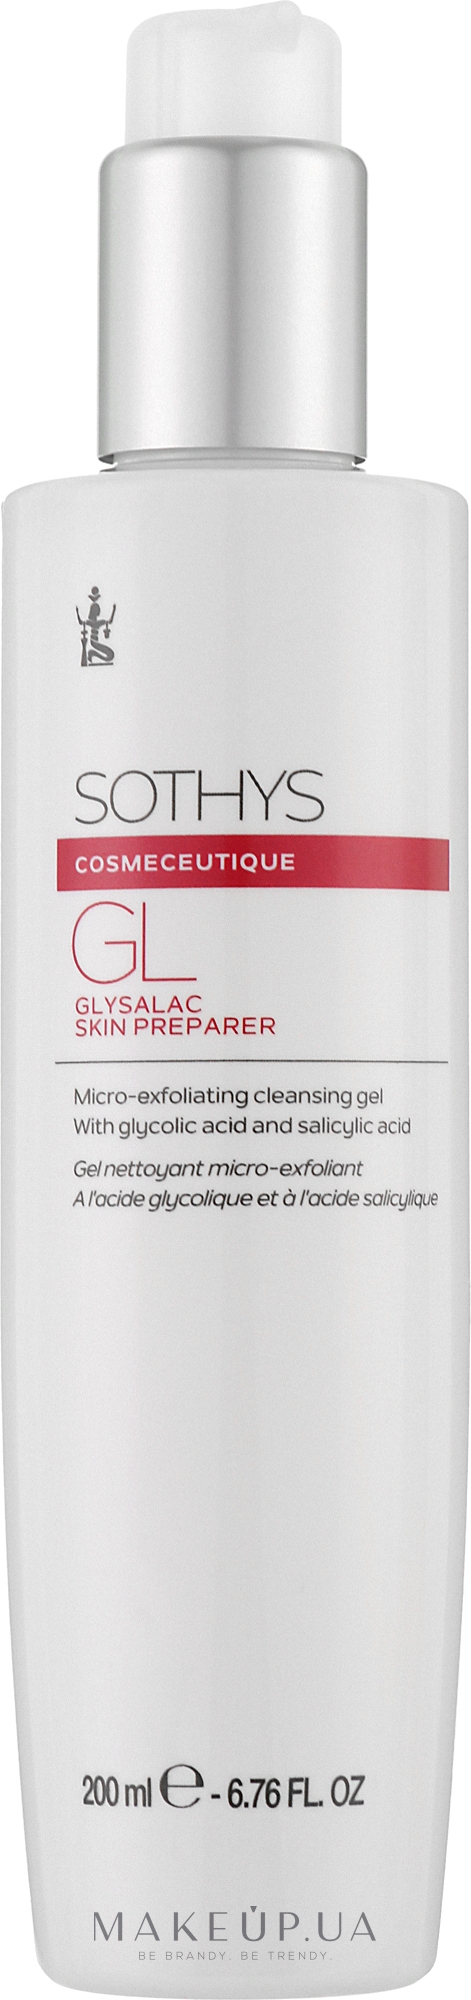 Мультиактивный очищающий гель для лица - Sothys Glisalac Skin Preparer — фото 200ml